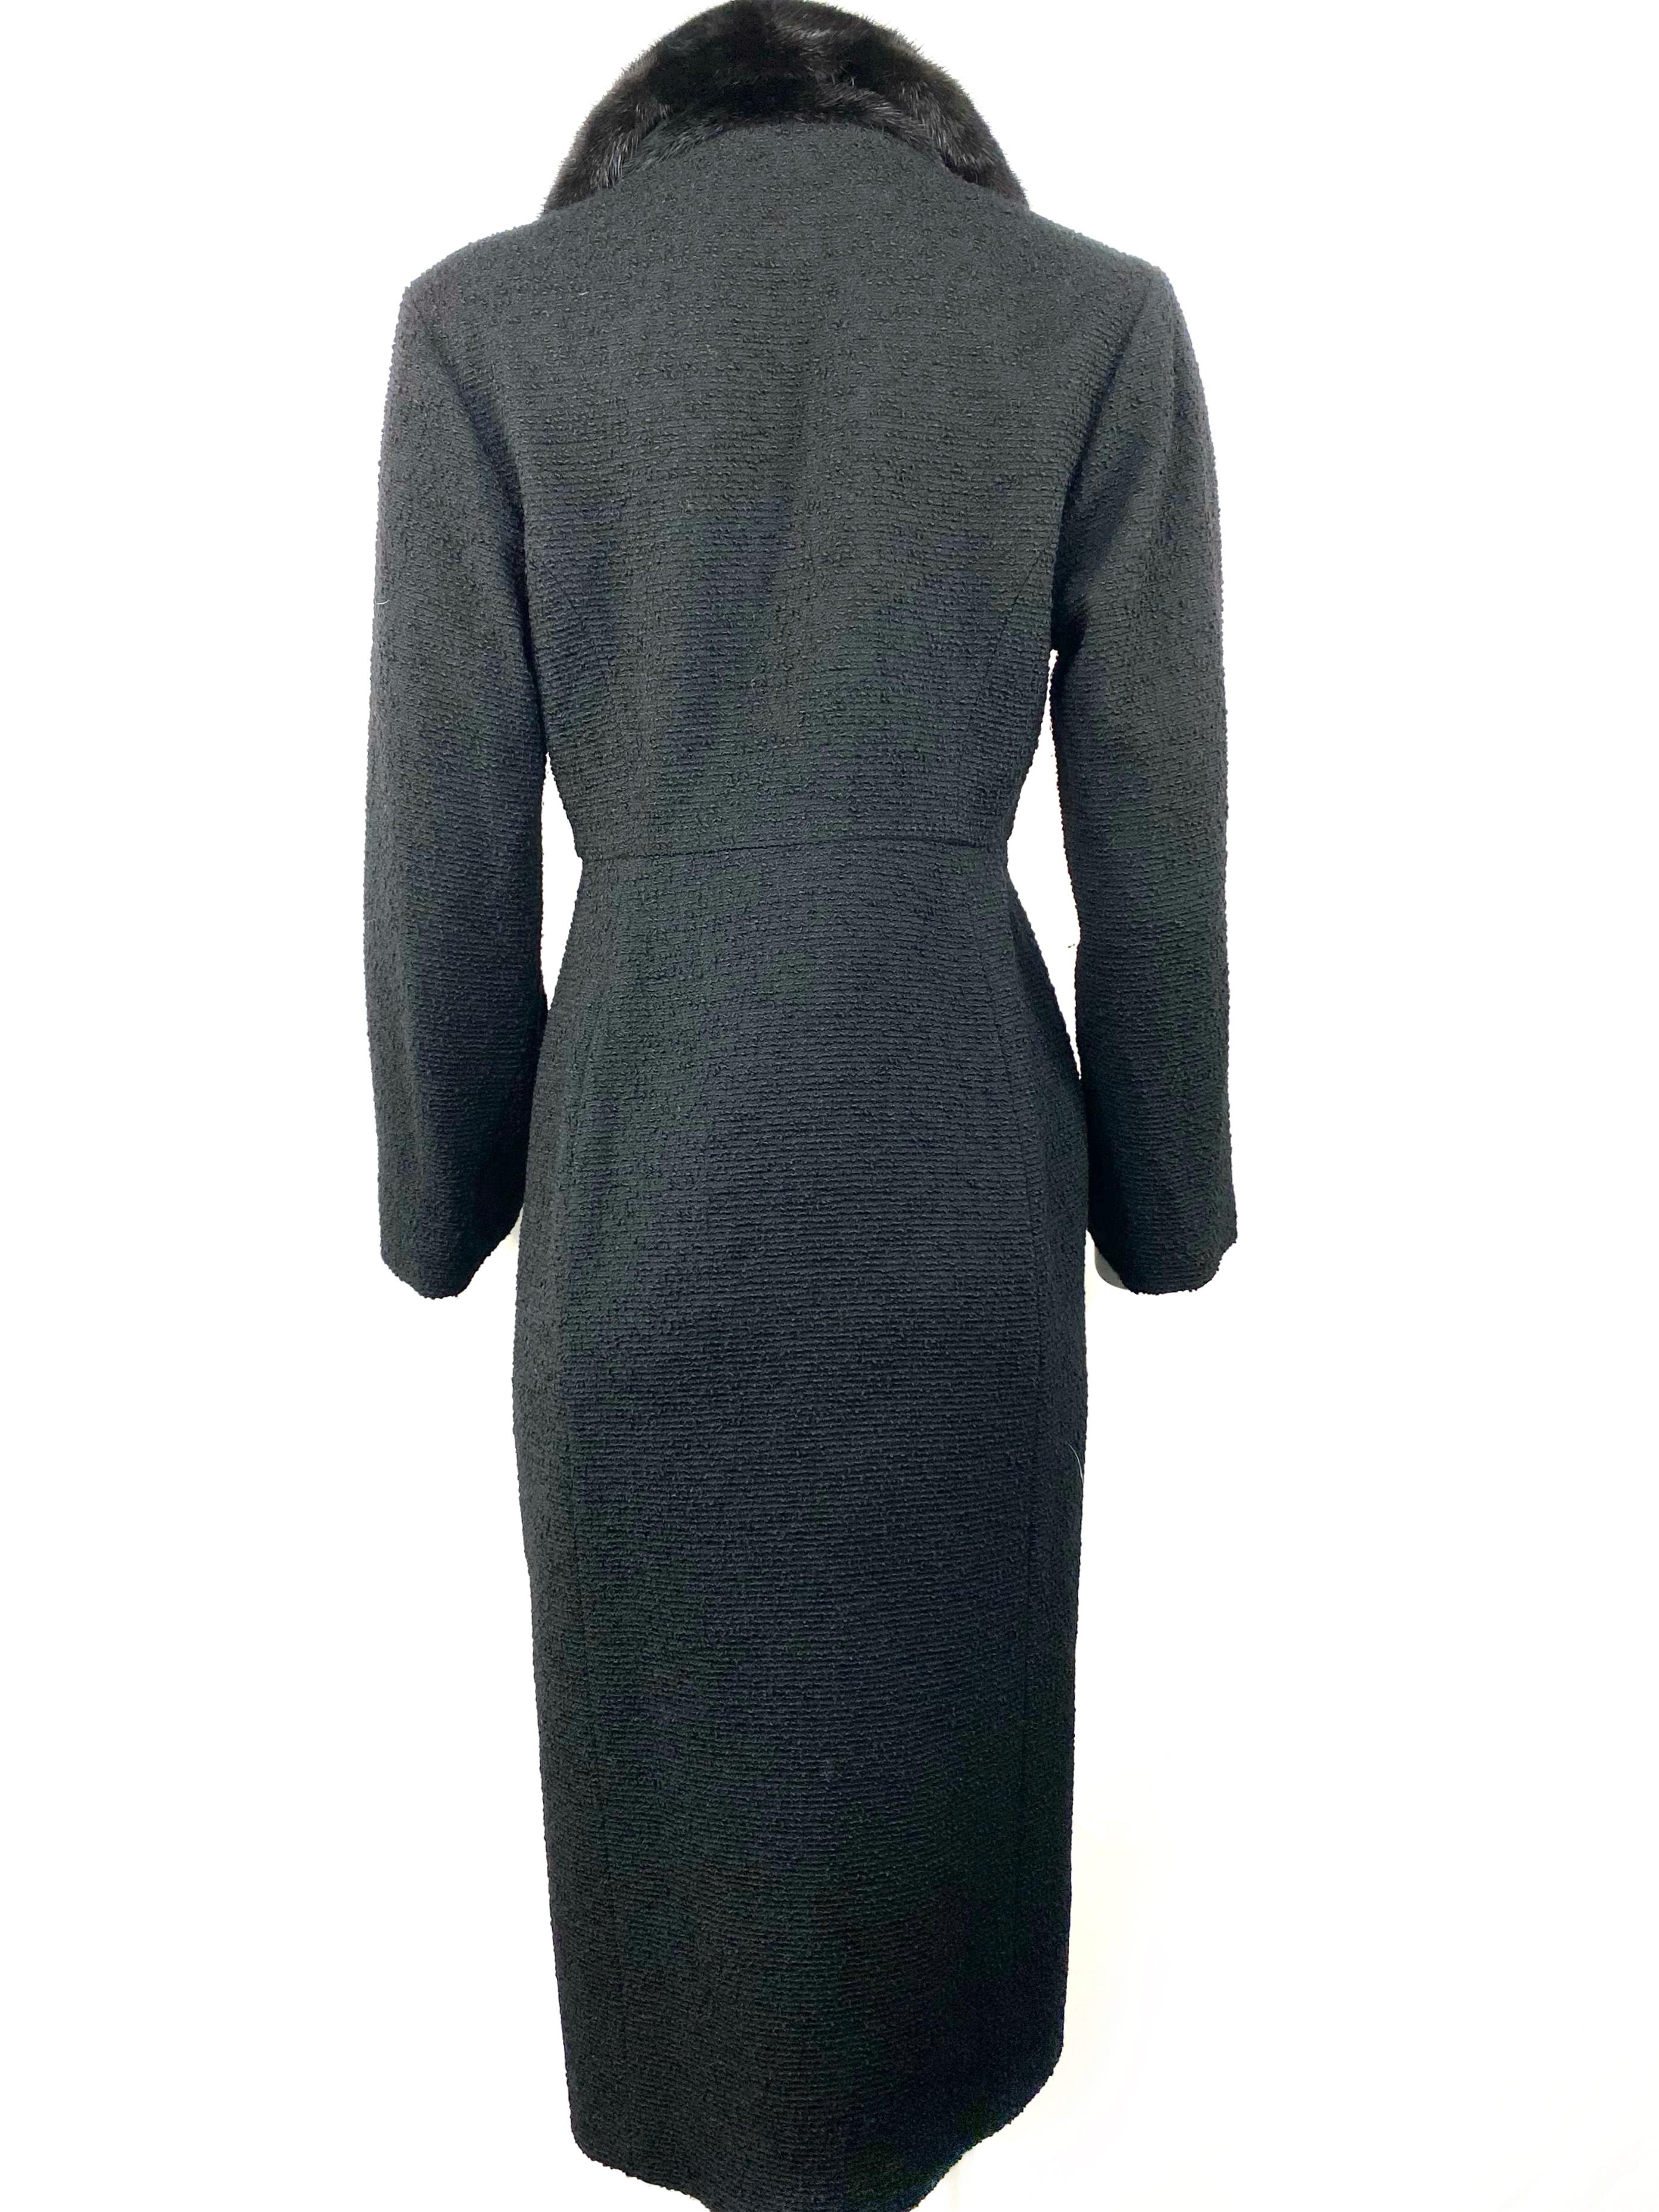 Christian Dior Black Wool Tweed and Fur Coat Jacket Size 40 1